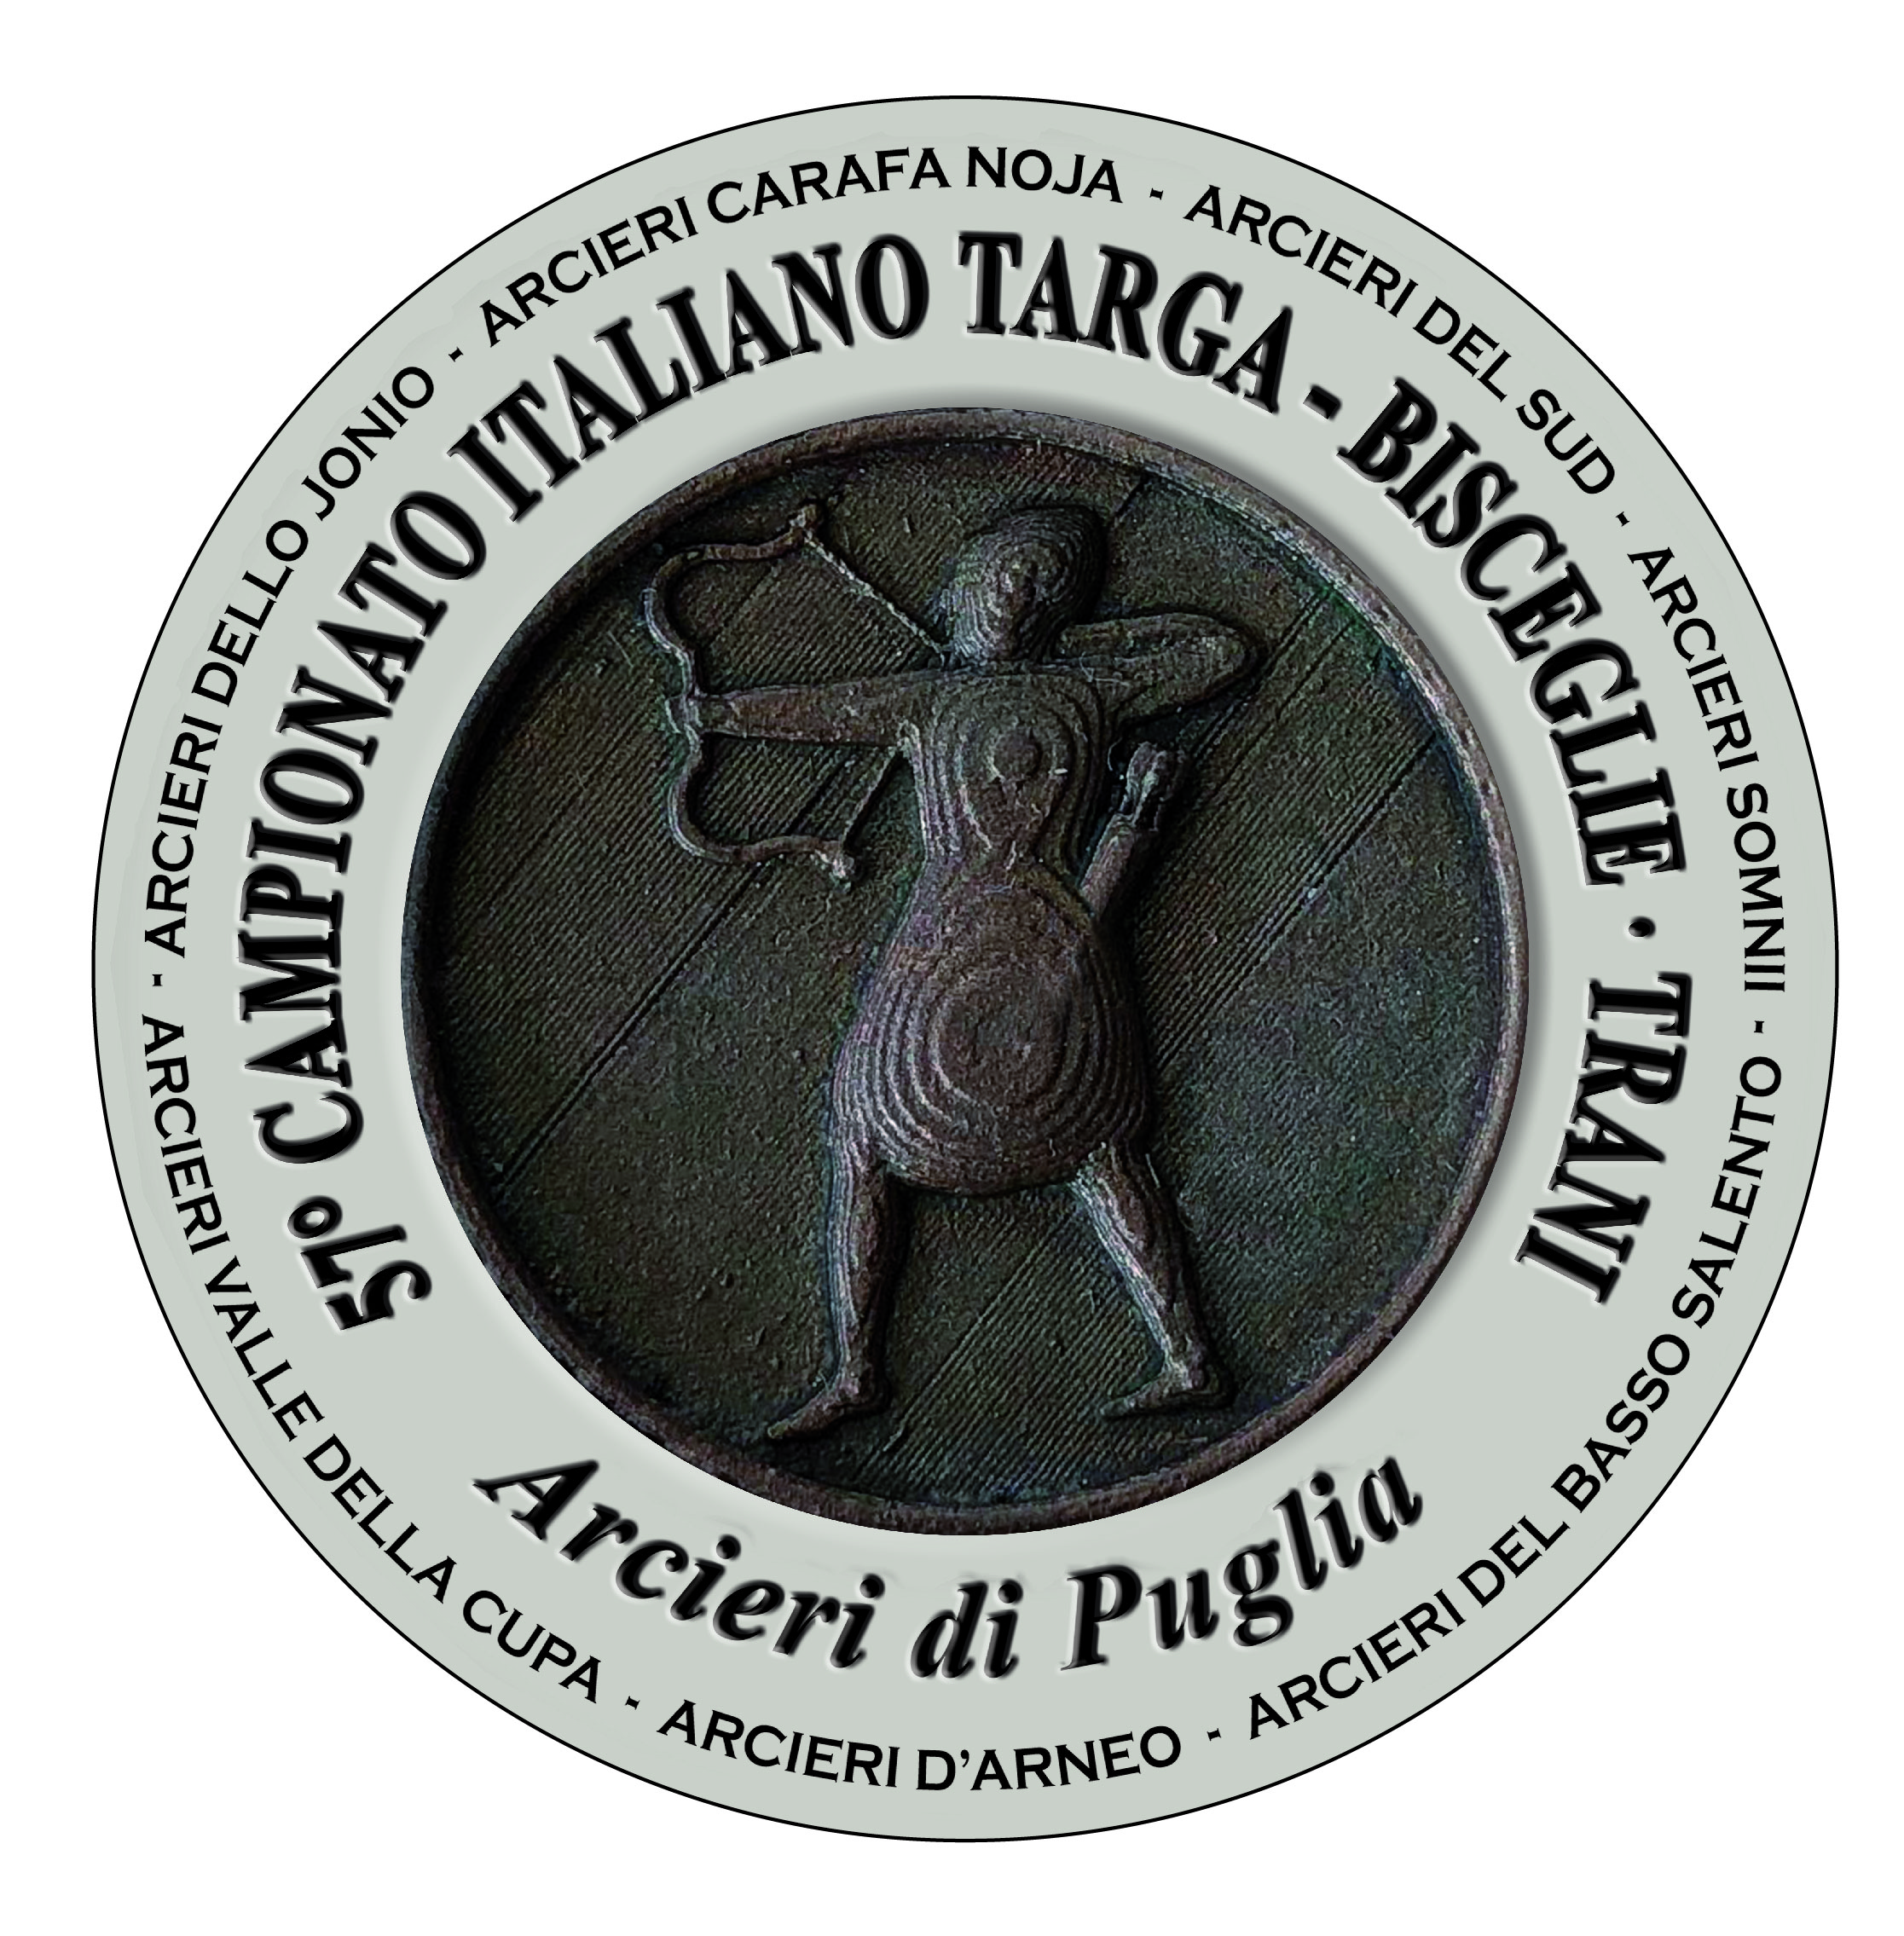 Campionati Italiani Targa